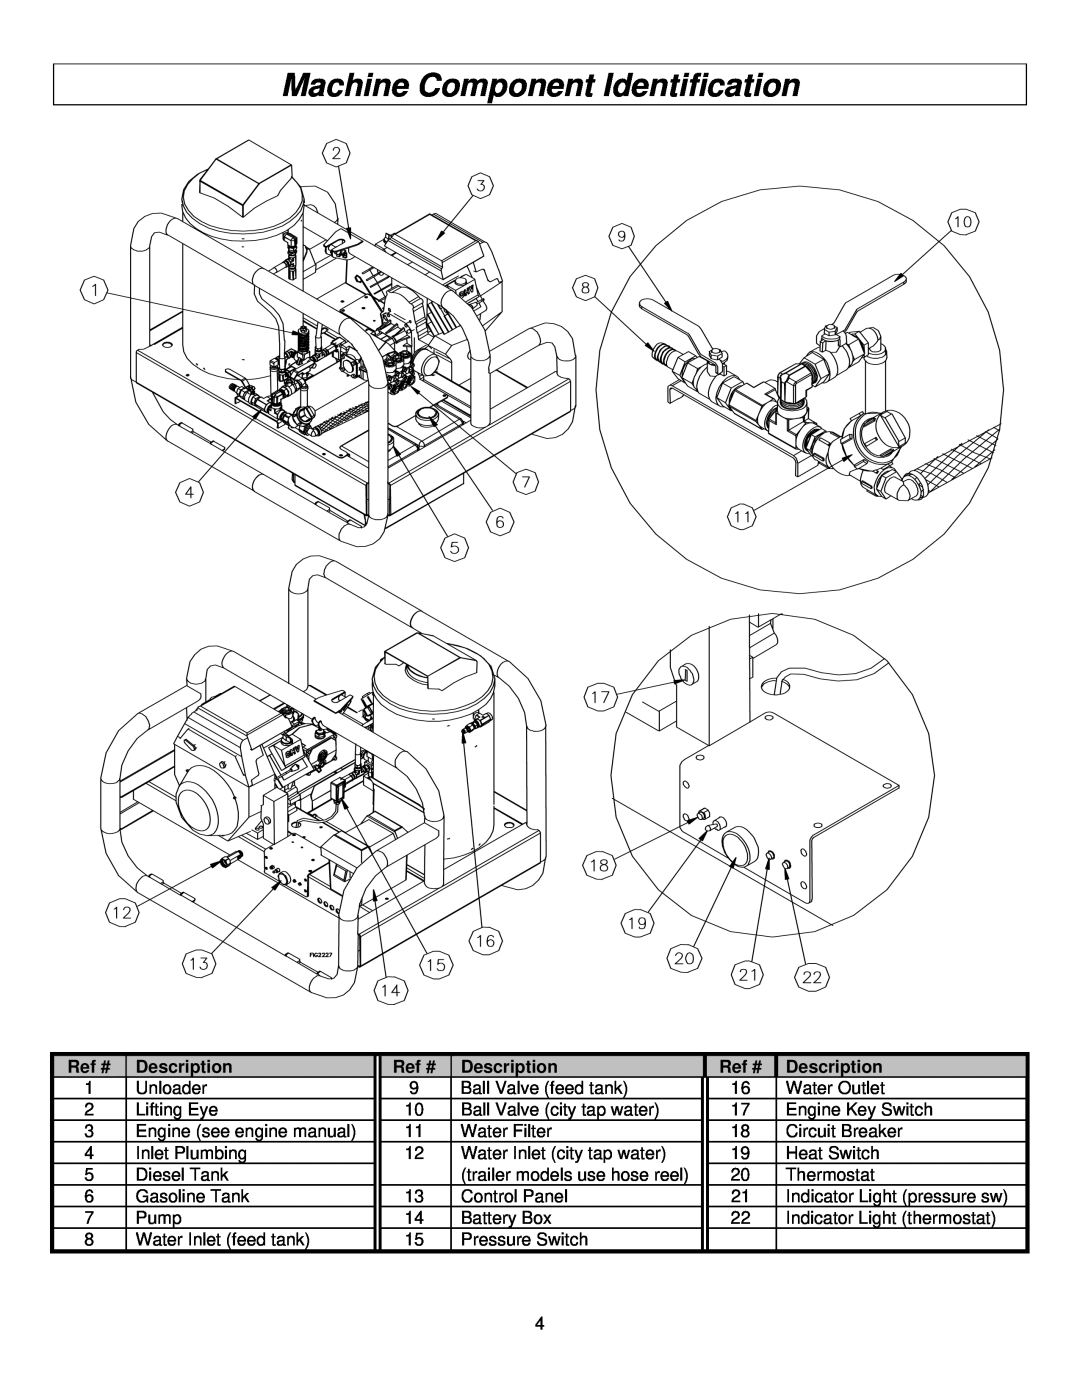 North Star M157594I specifications Machine Component Identification, Ref #, Description 